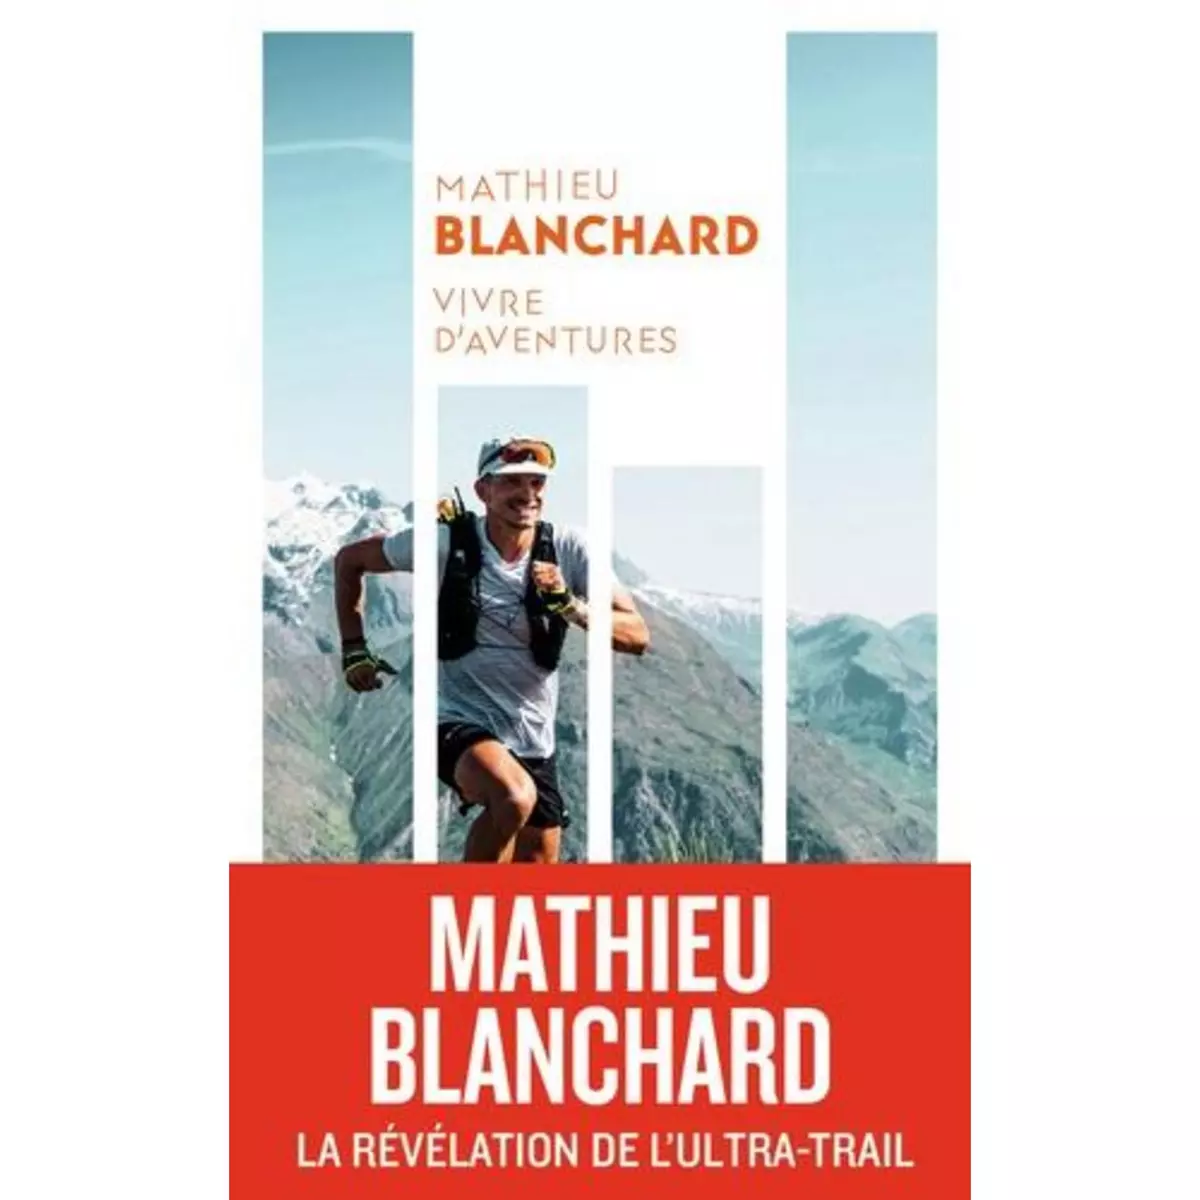  VIVRE D'AVENTURES, Blanchard Mathieu